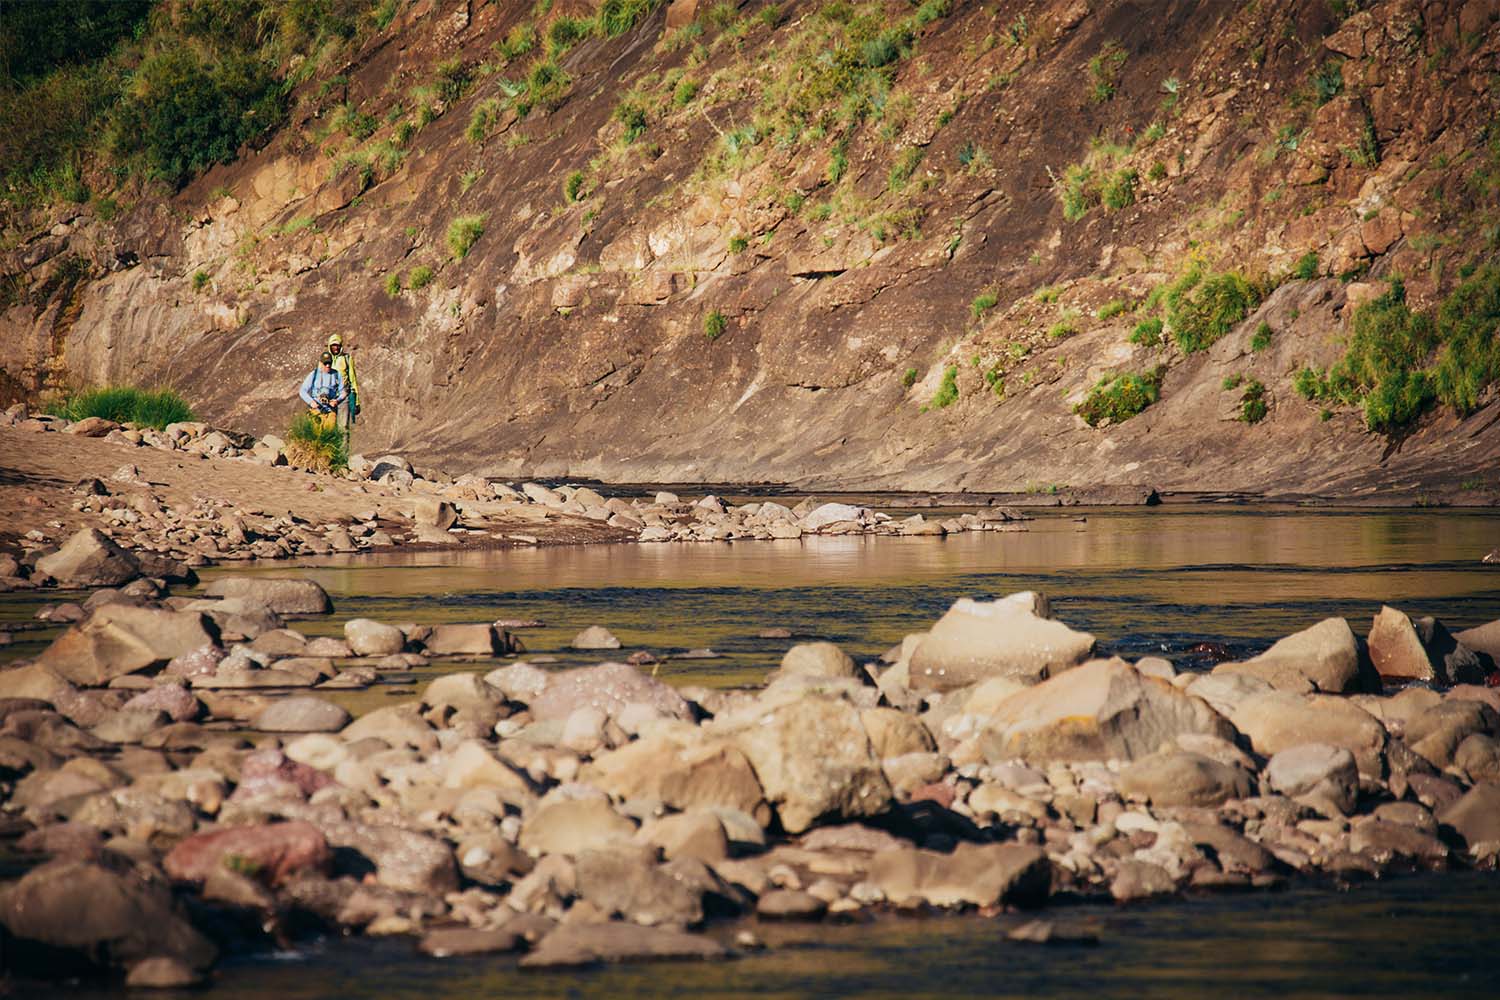 Fishing on the Bokong River